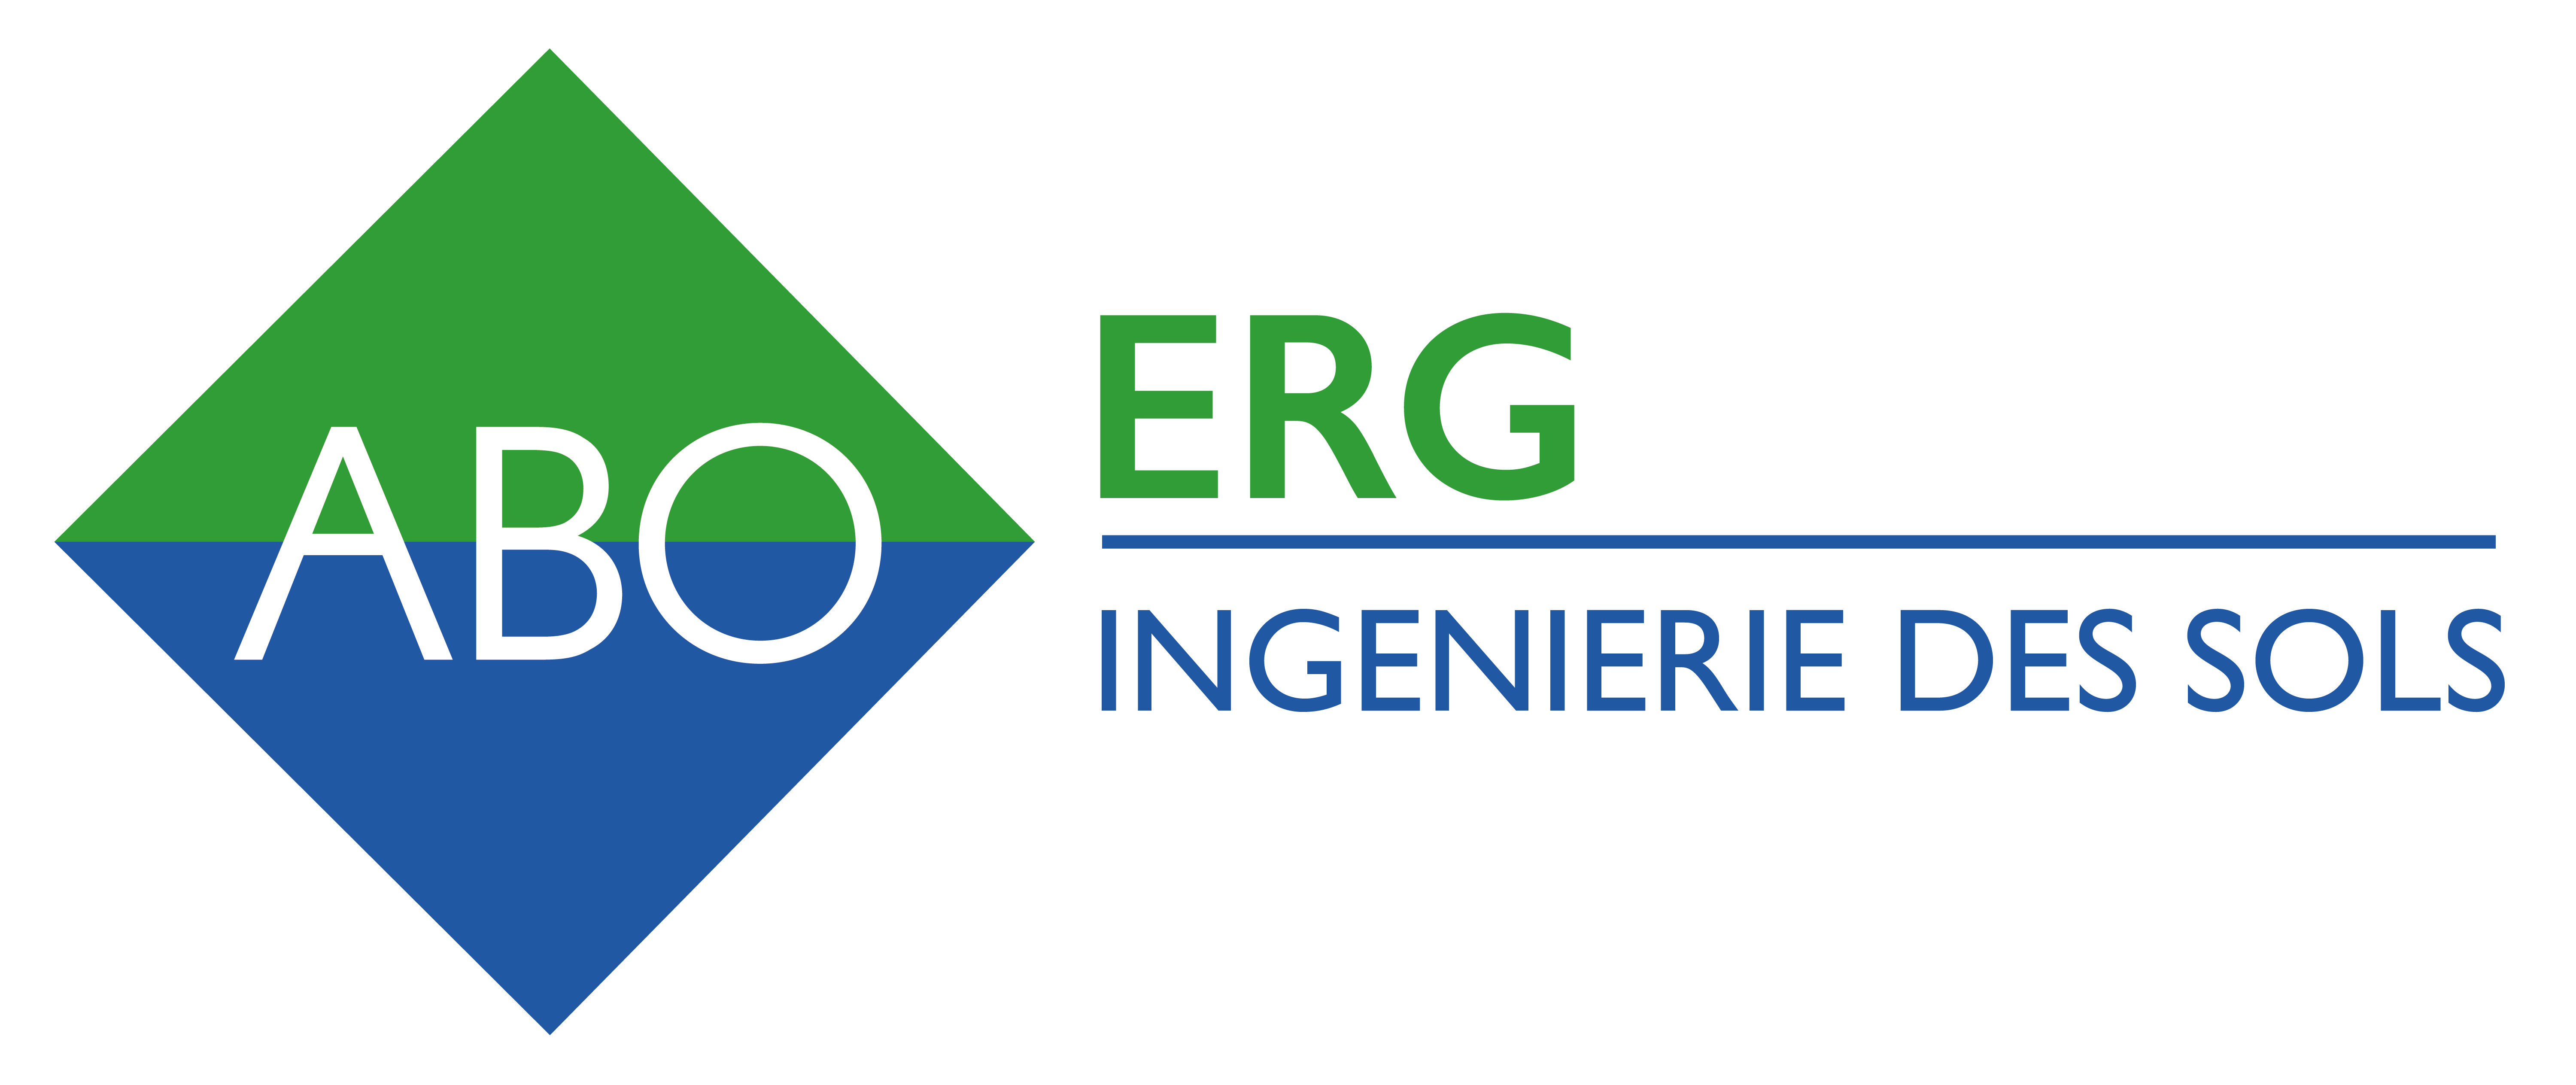 Logo adherent ABO-ERG GEOTECHNIQUE